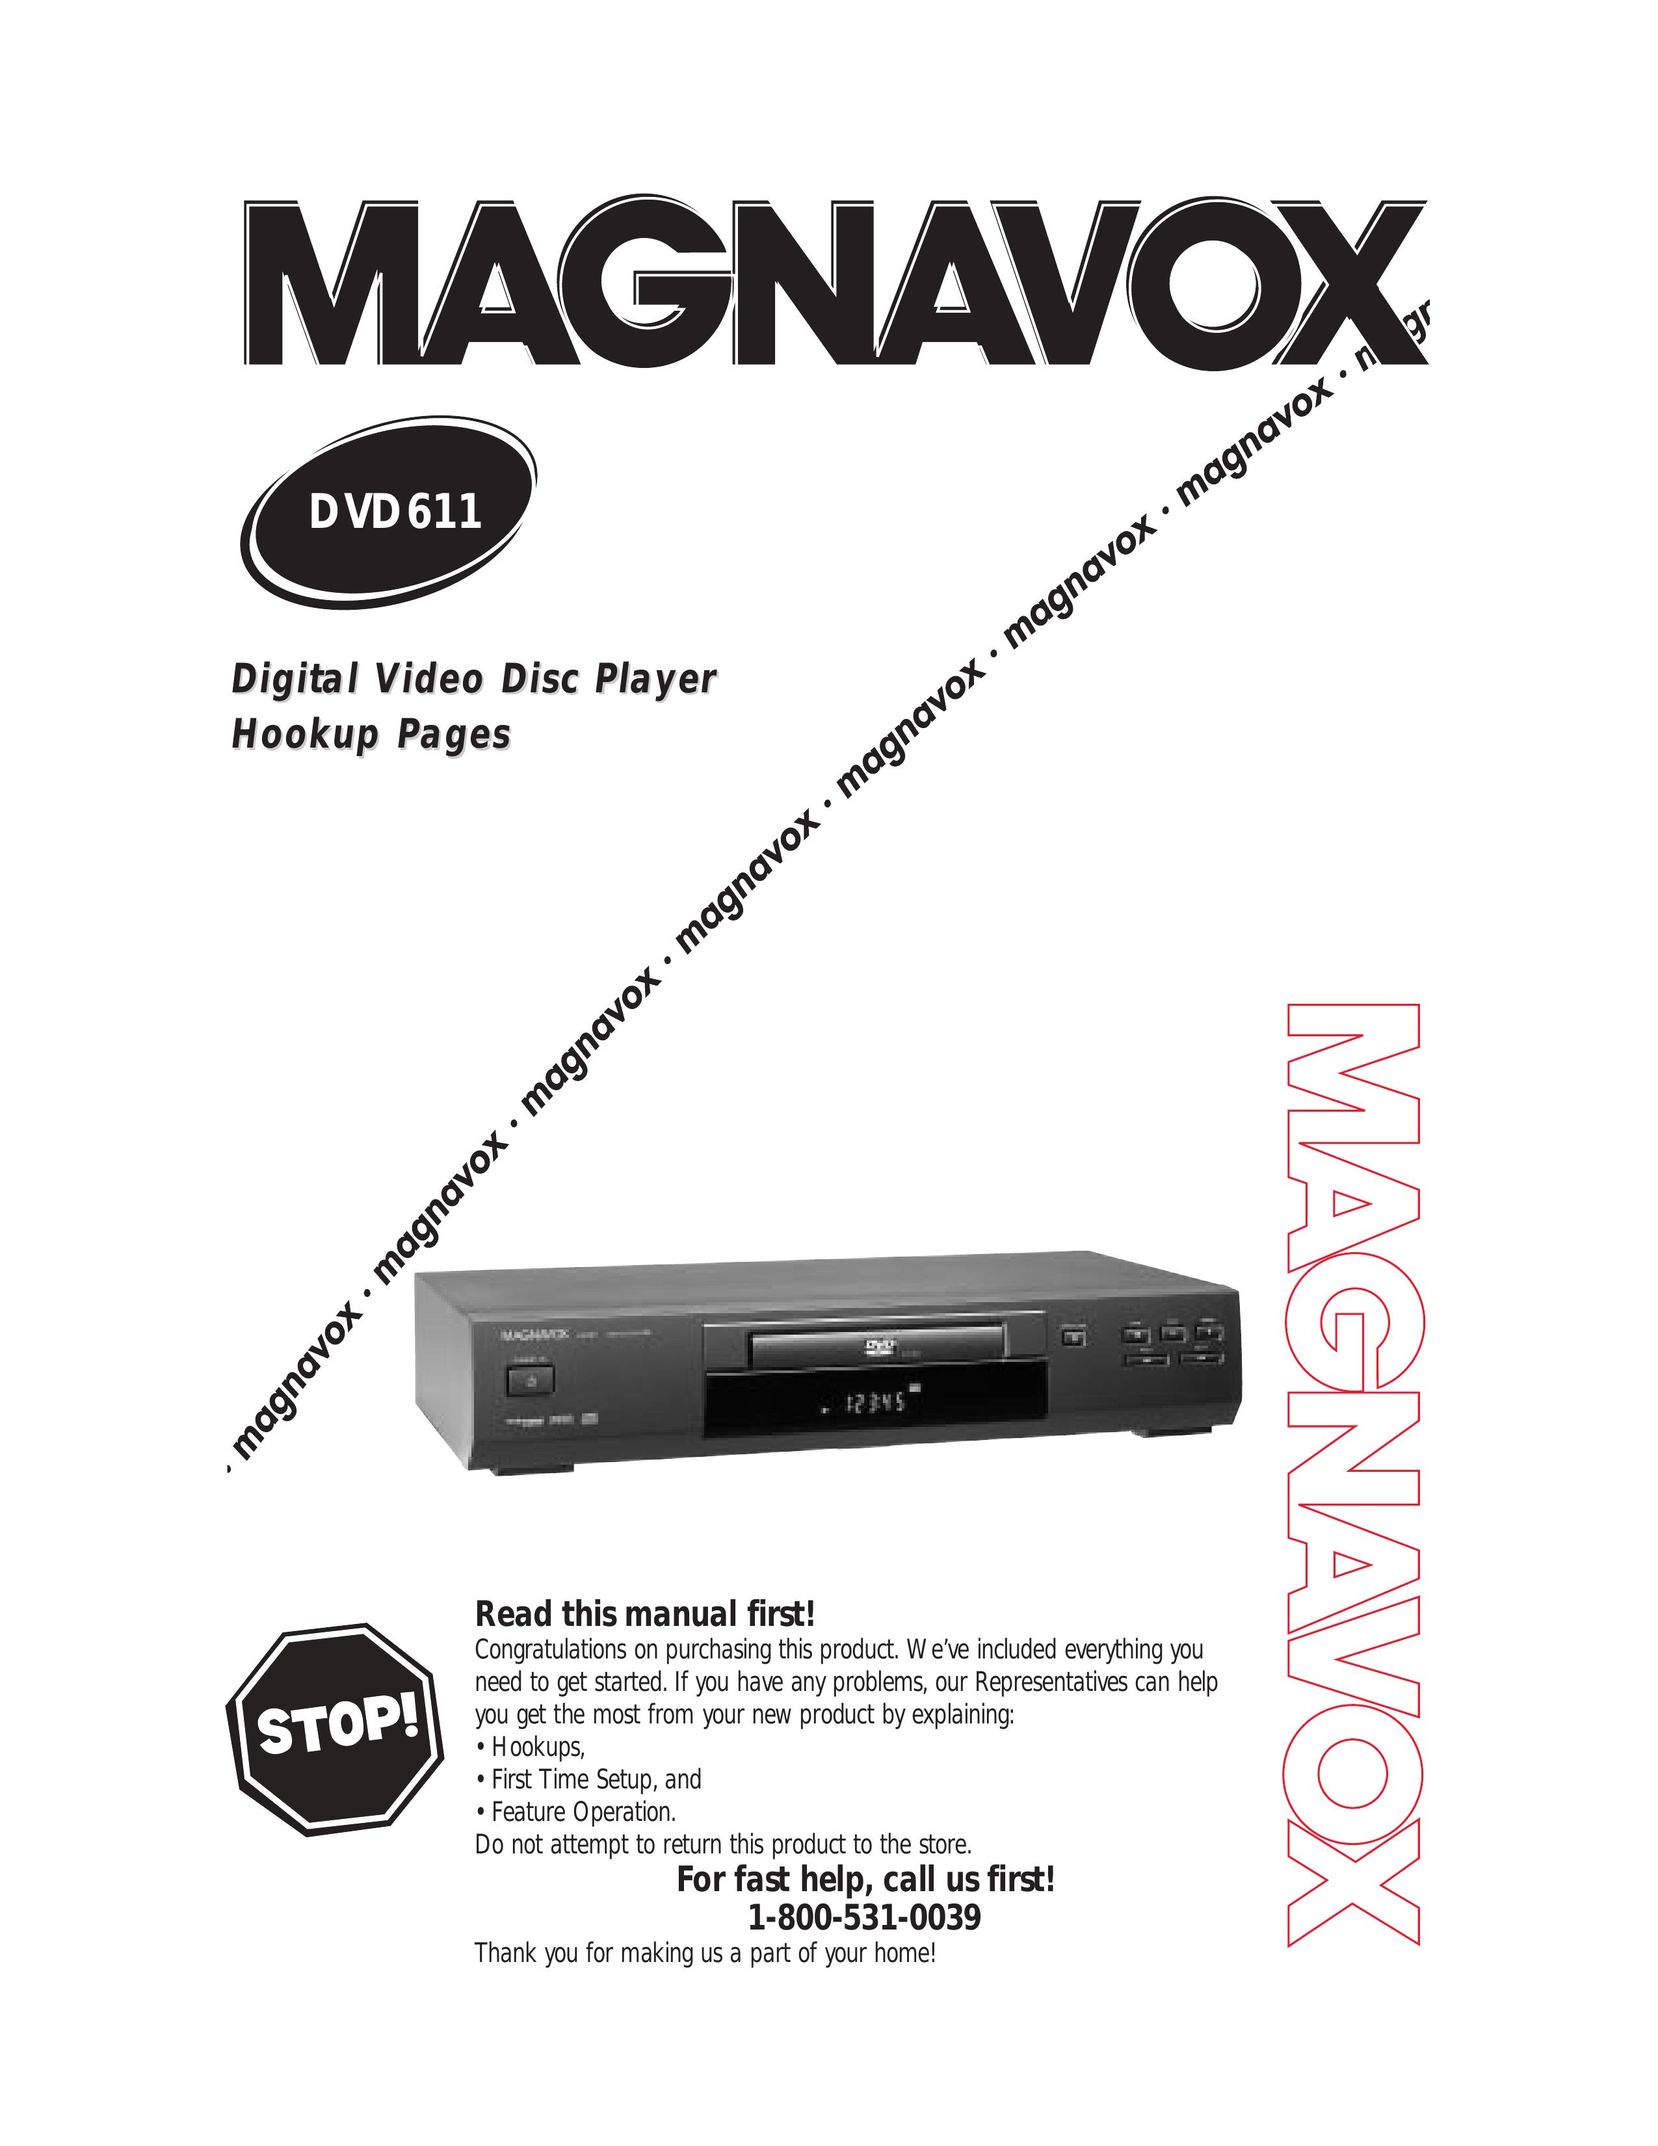 Magnavox DVD611 DVD Player User Manual